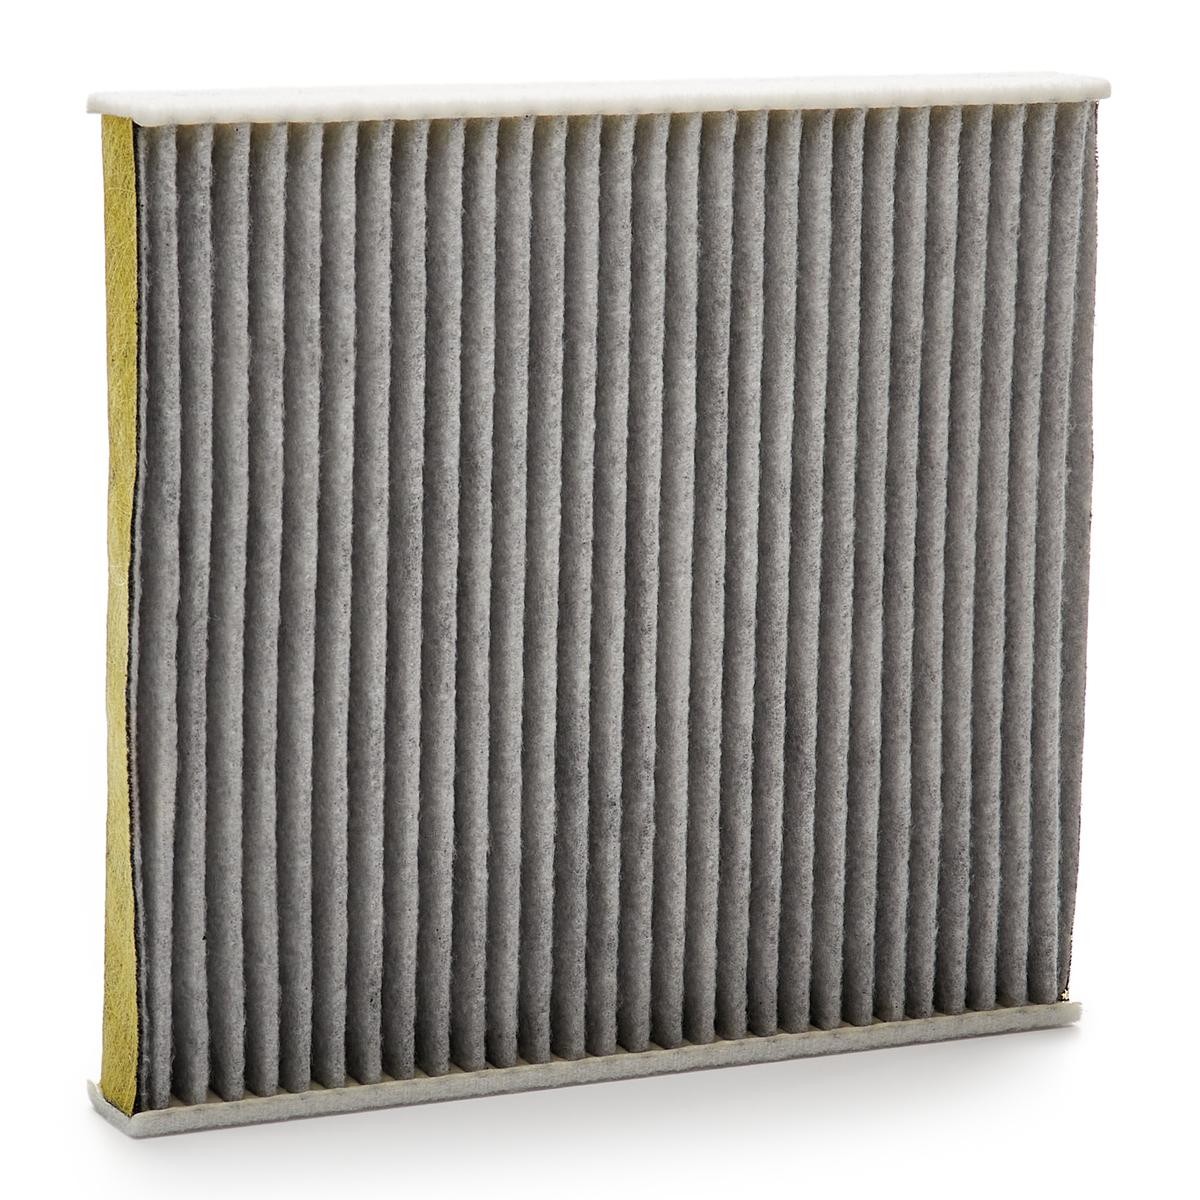 Buy Pollen filter MANN-FILTER FP 26 009 - Heating and ventilation parts VW Touran 5t online